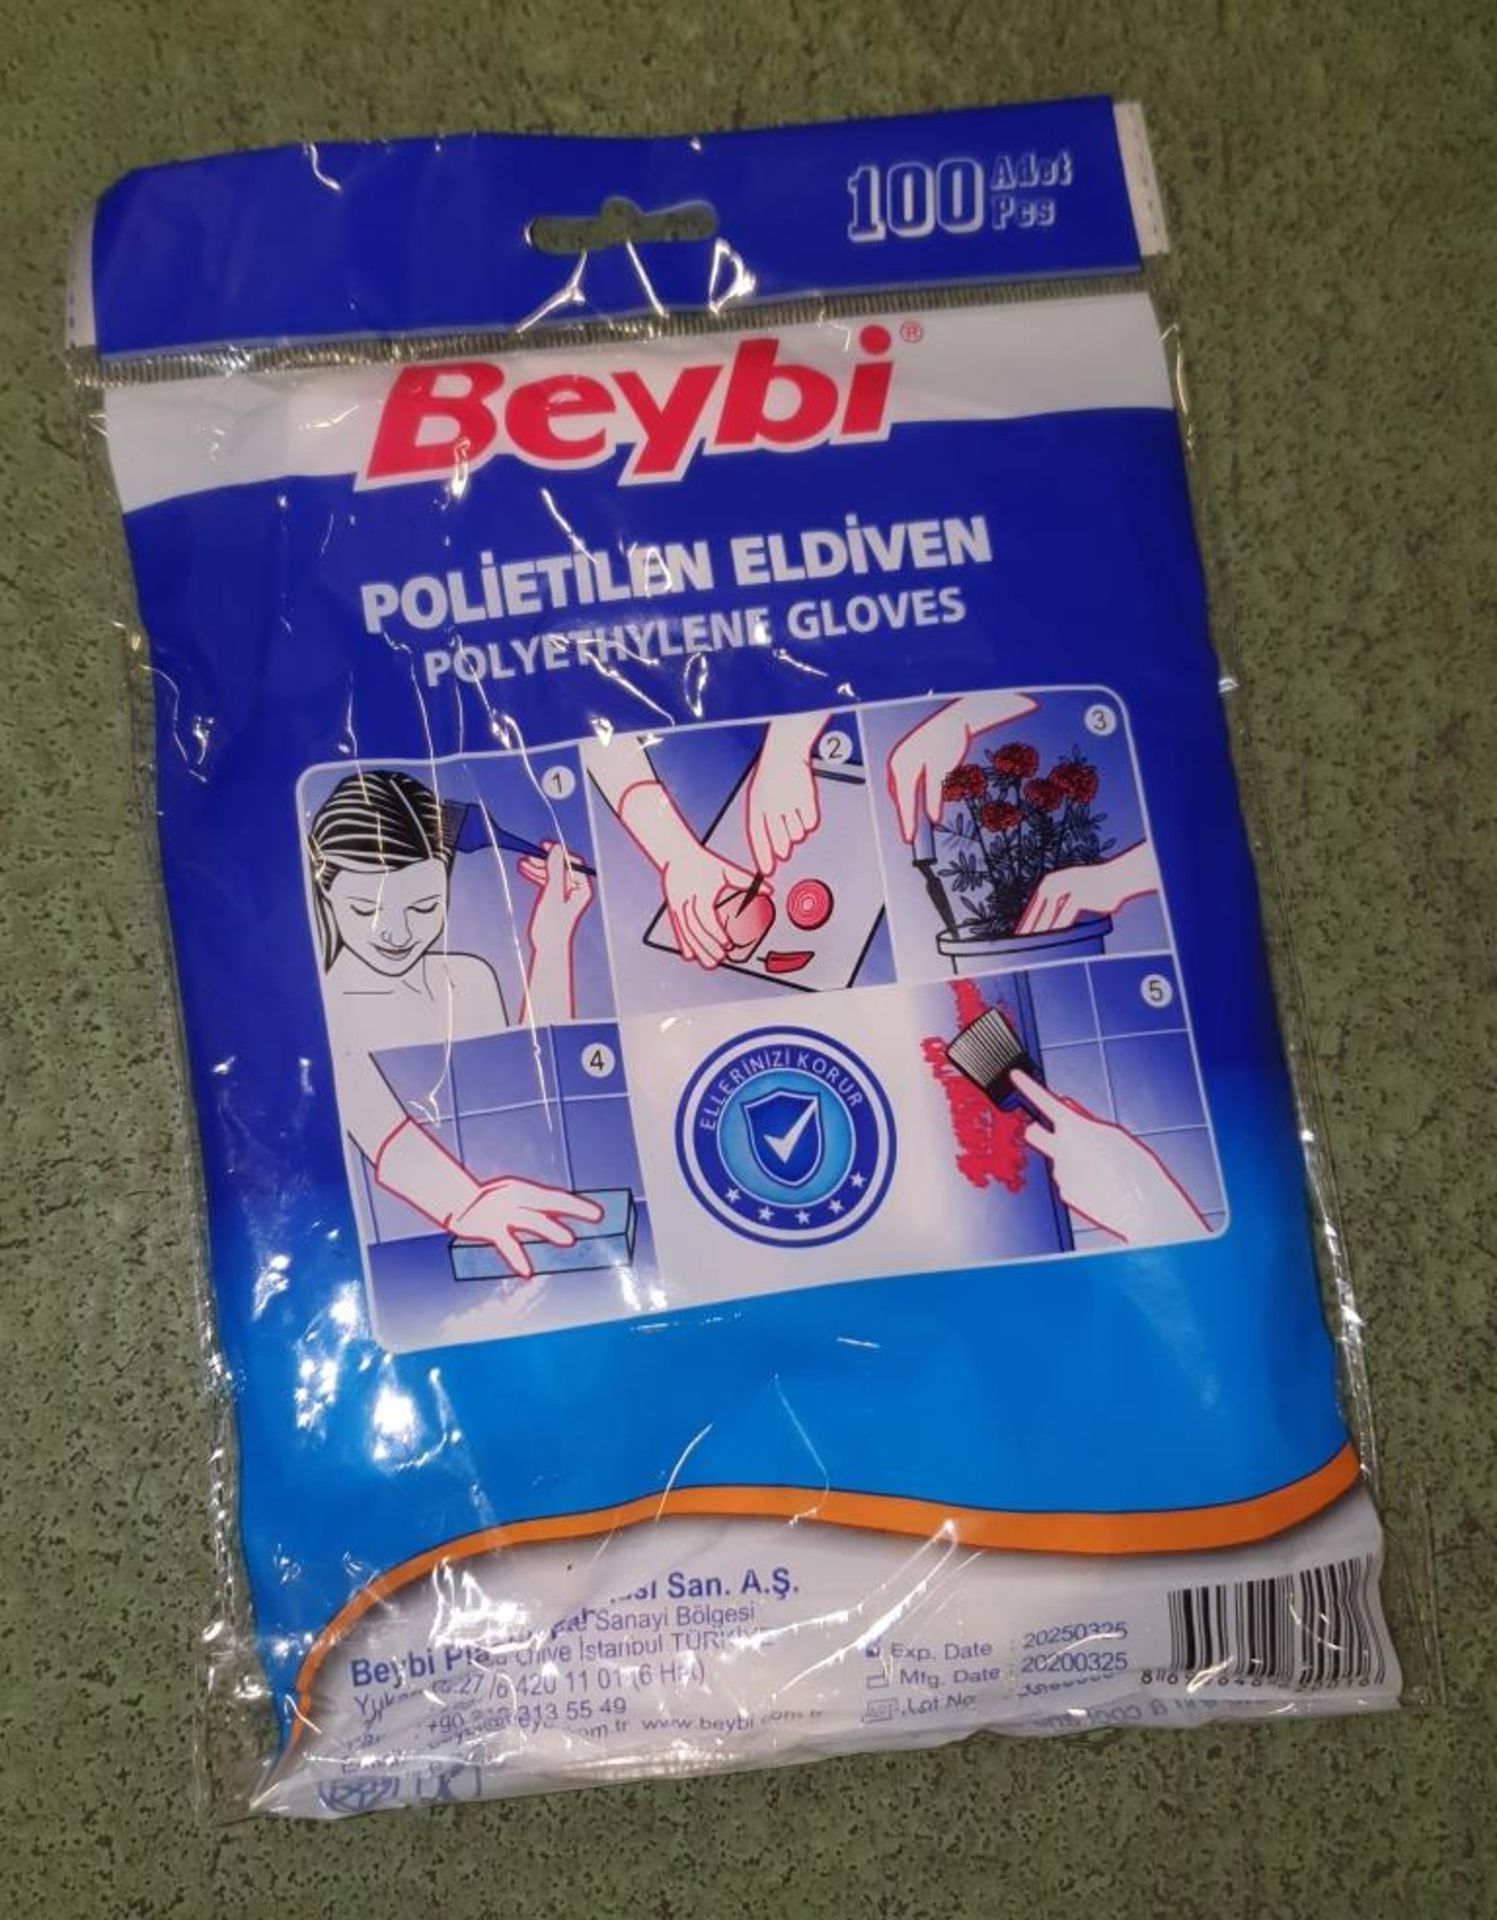 Beybi HDPE Gloves - Size L - 100 gloves per bag - 200 bags per box - 1 box - Image 4 of 4